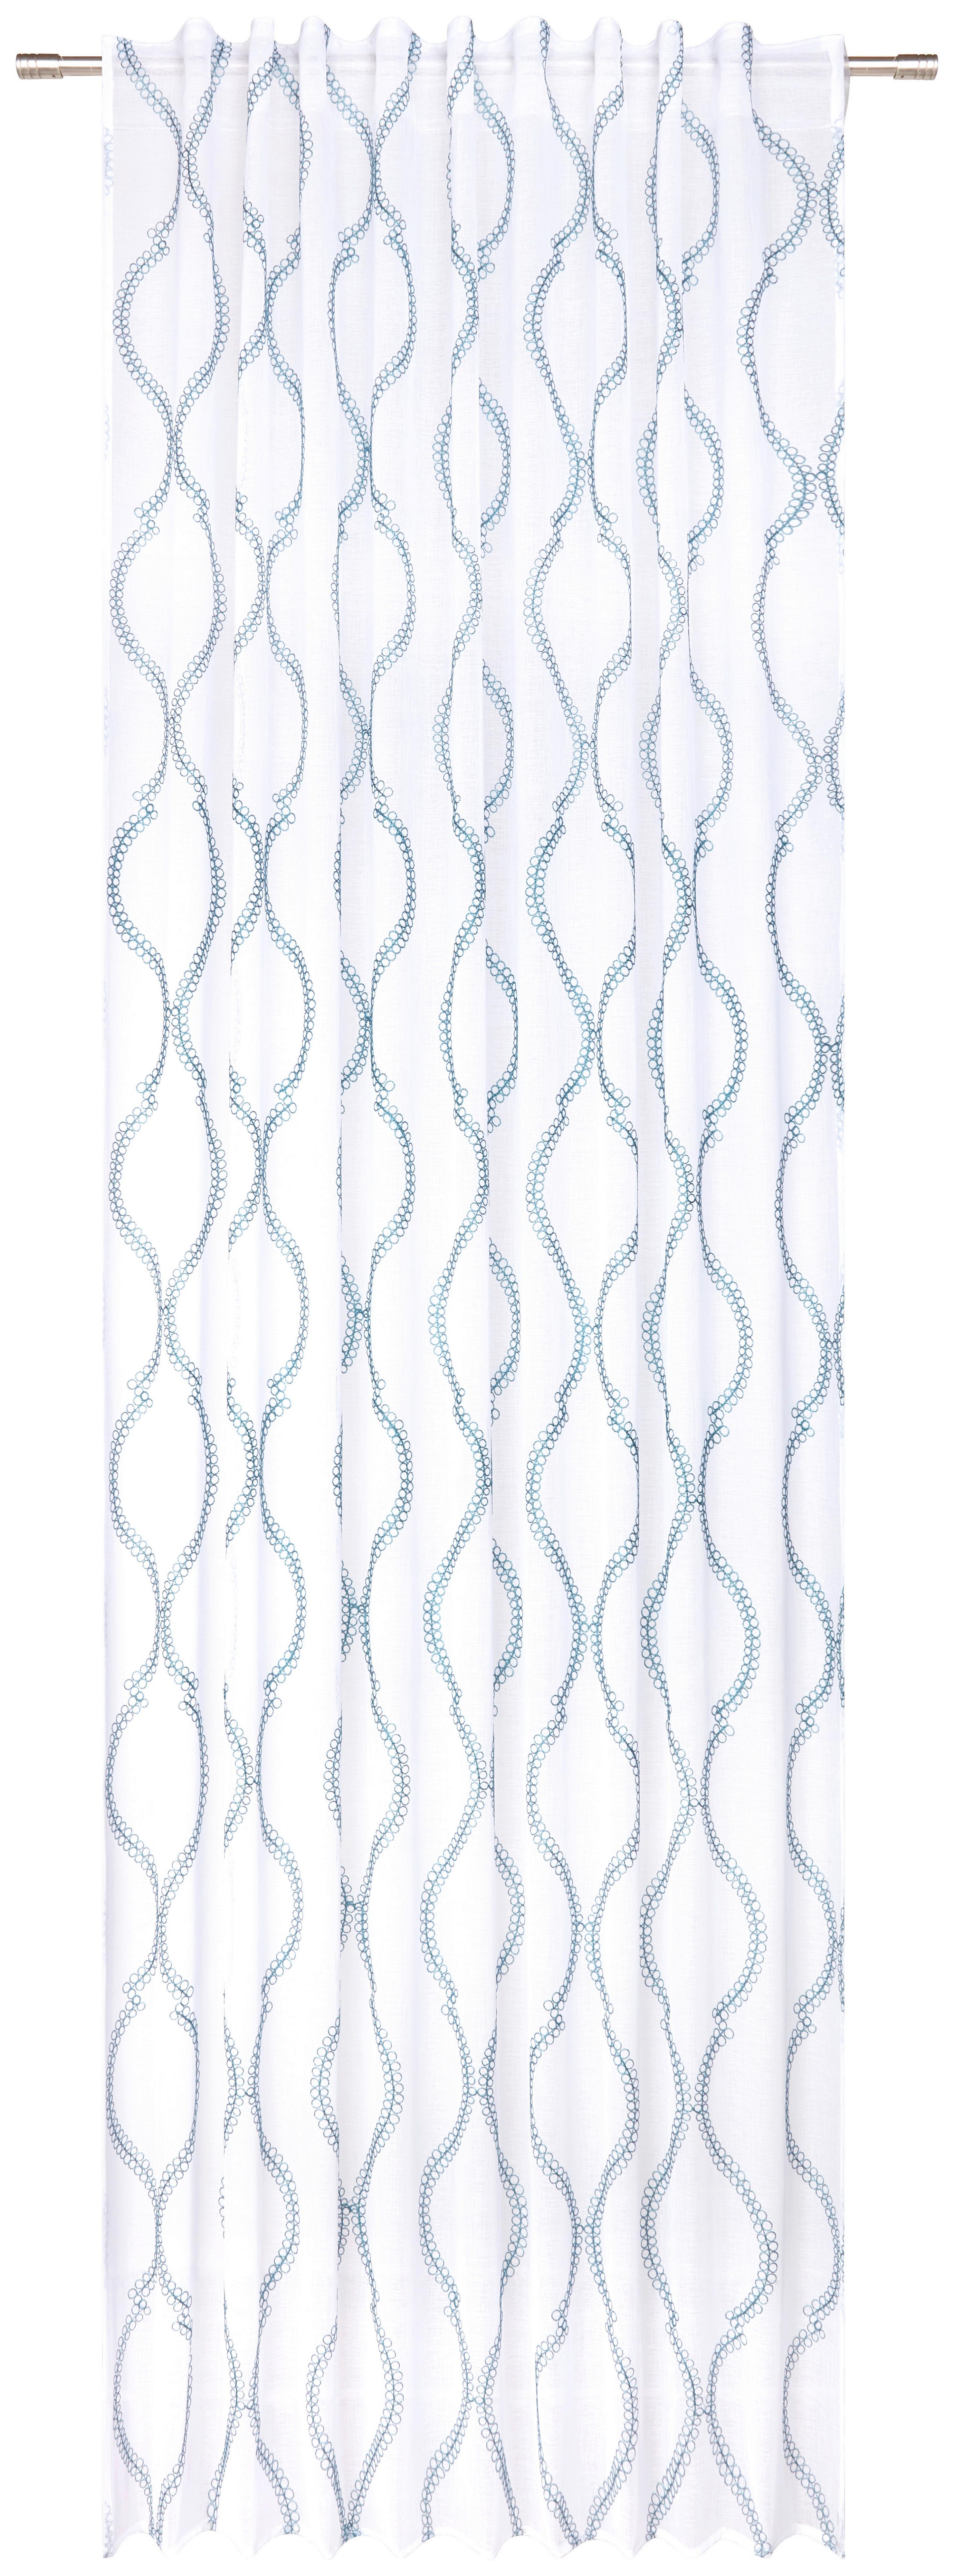 Gotova Zavjesa Orie - boje žada, Modern, tekstil (135/255cm) - Modern Living